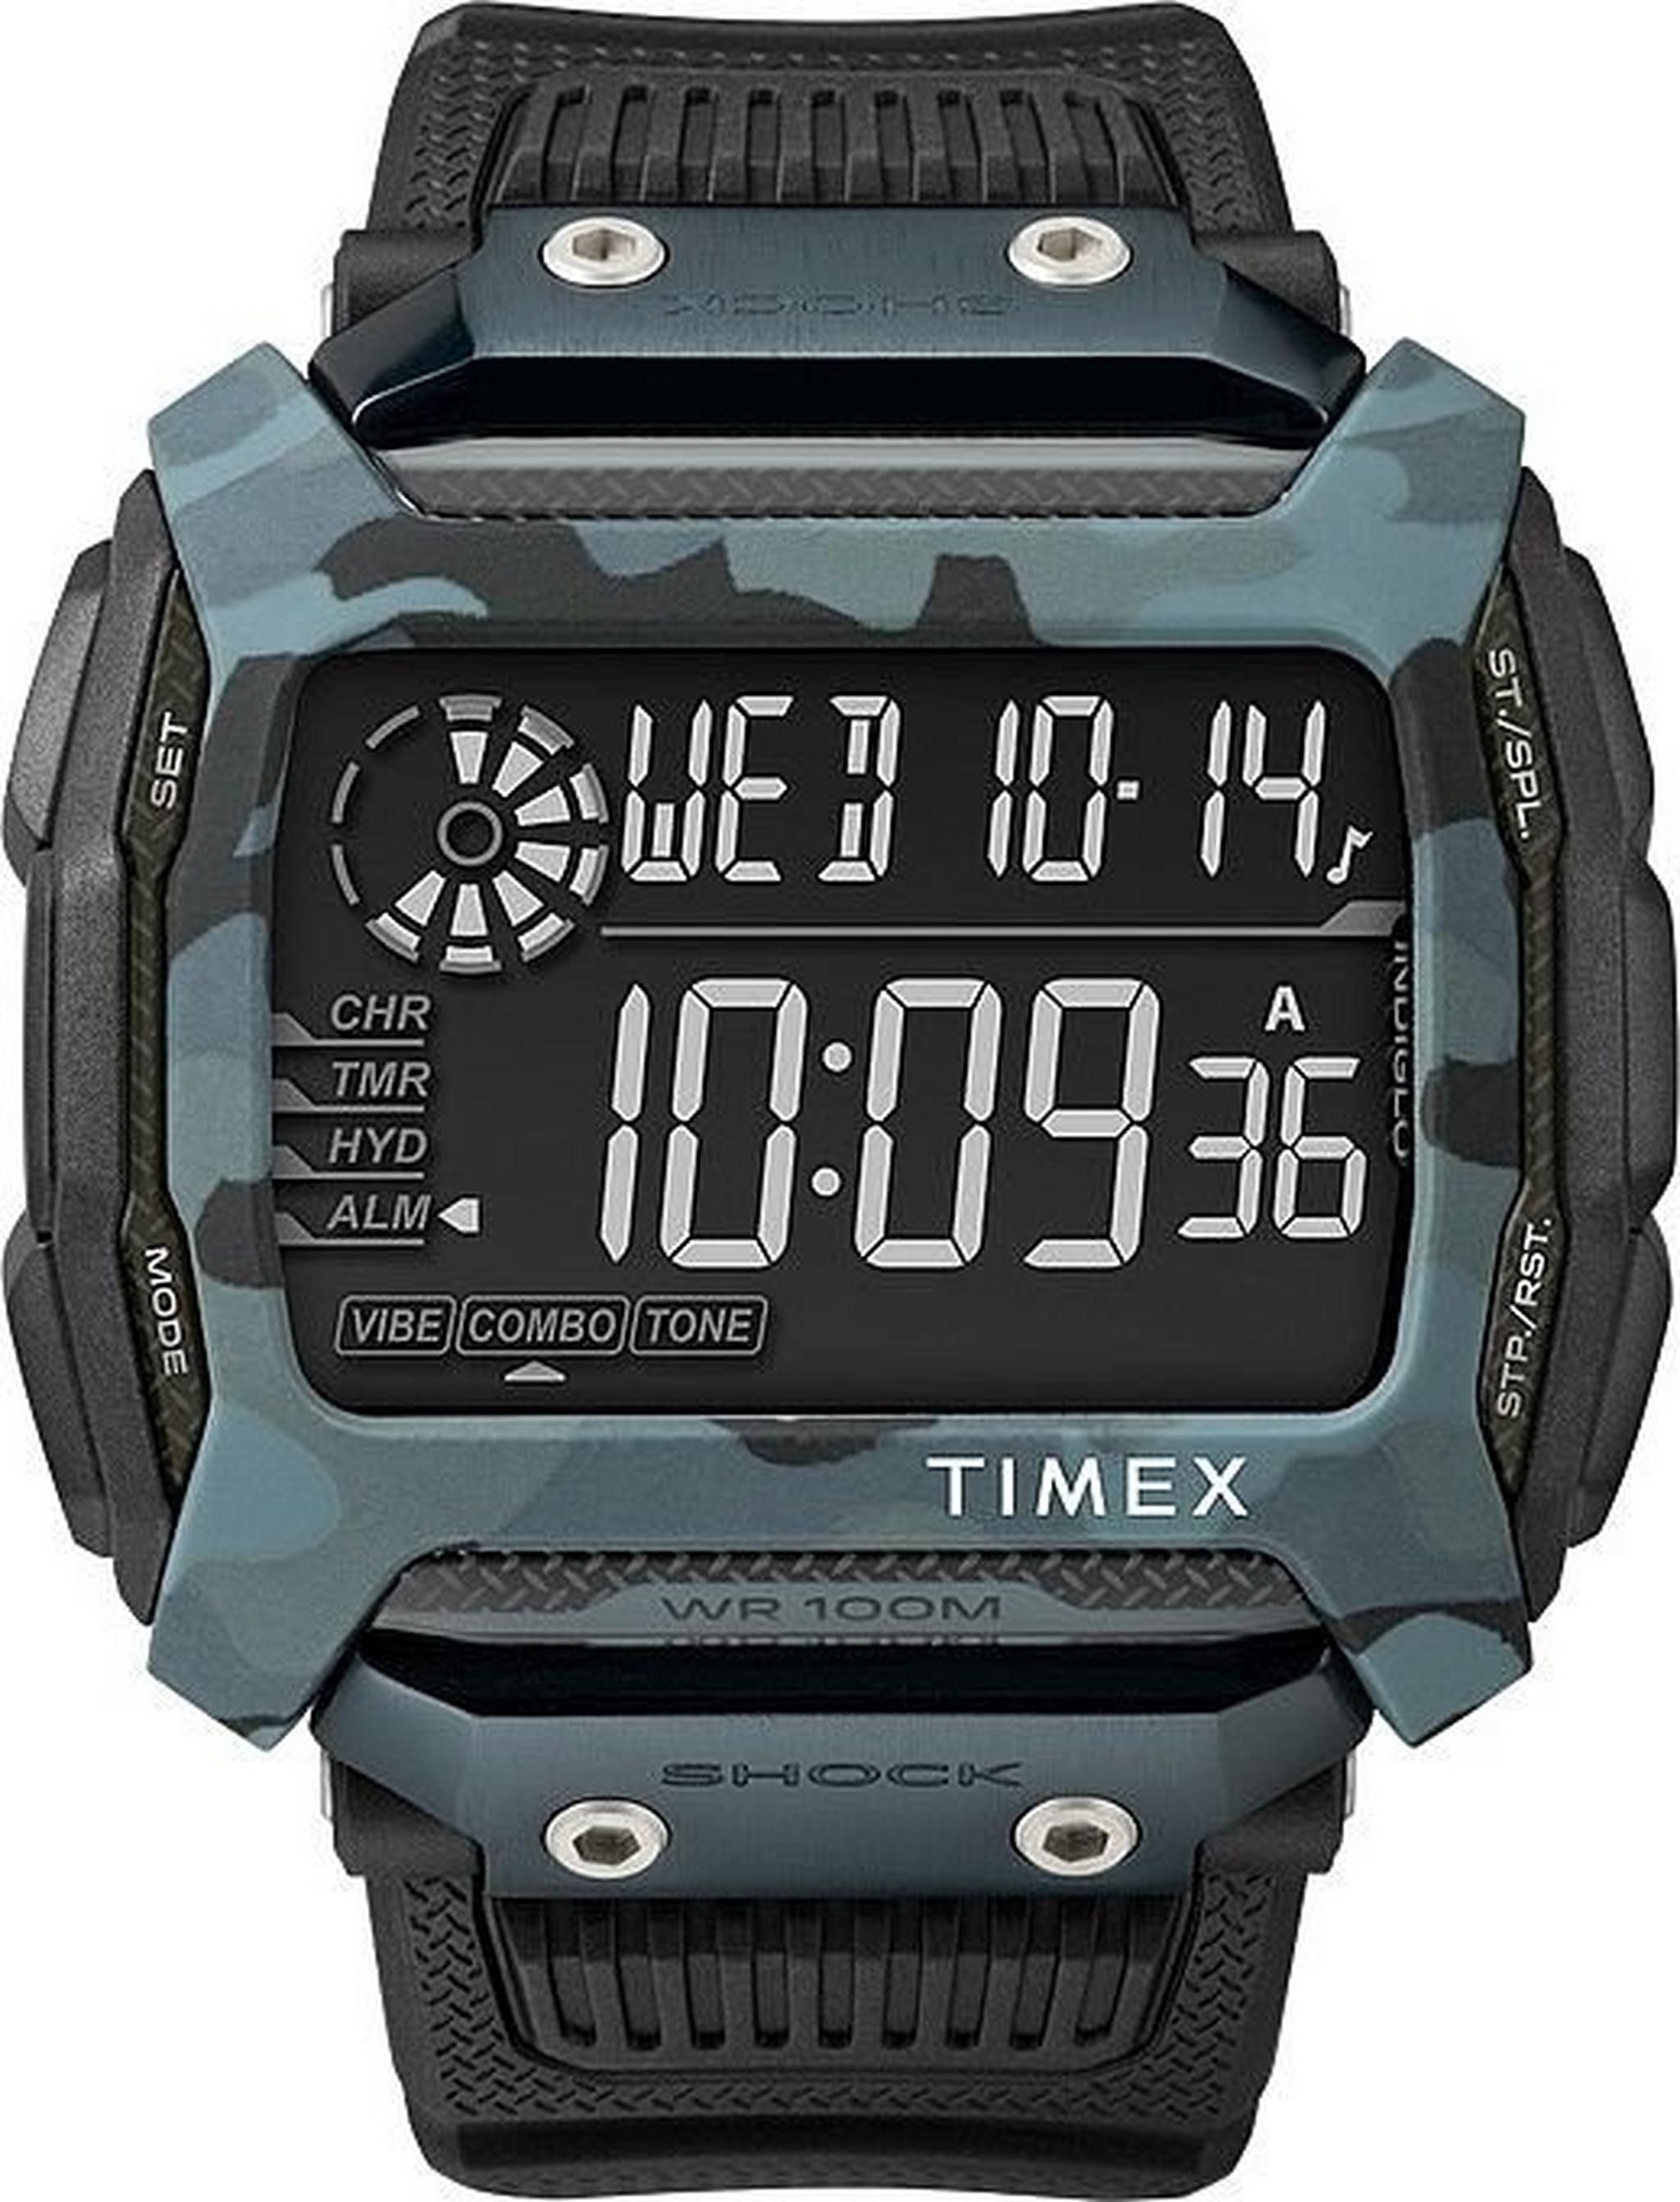 ساعة تايمكس شوك للرجال بعرض رقمي - حزام مطاطي TW5M18200CG - أسود